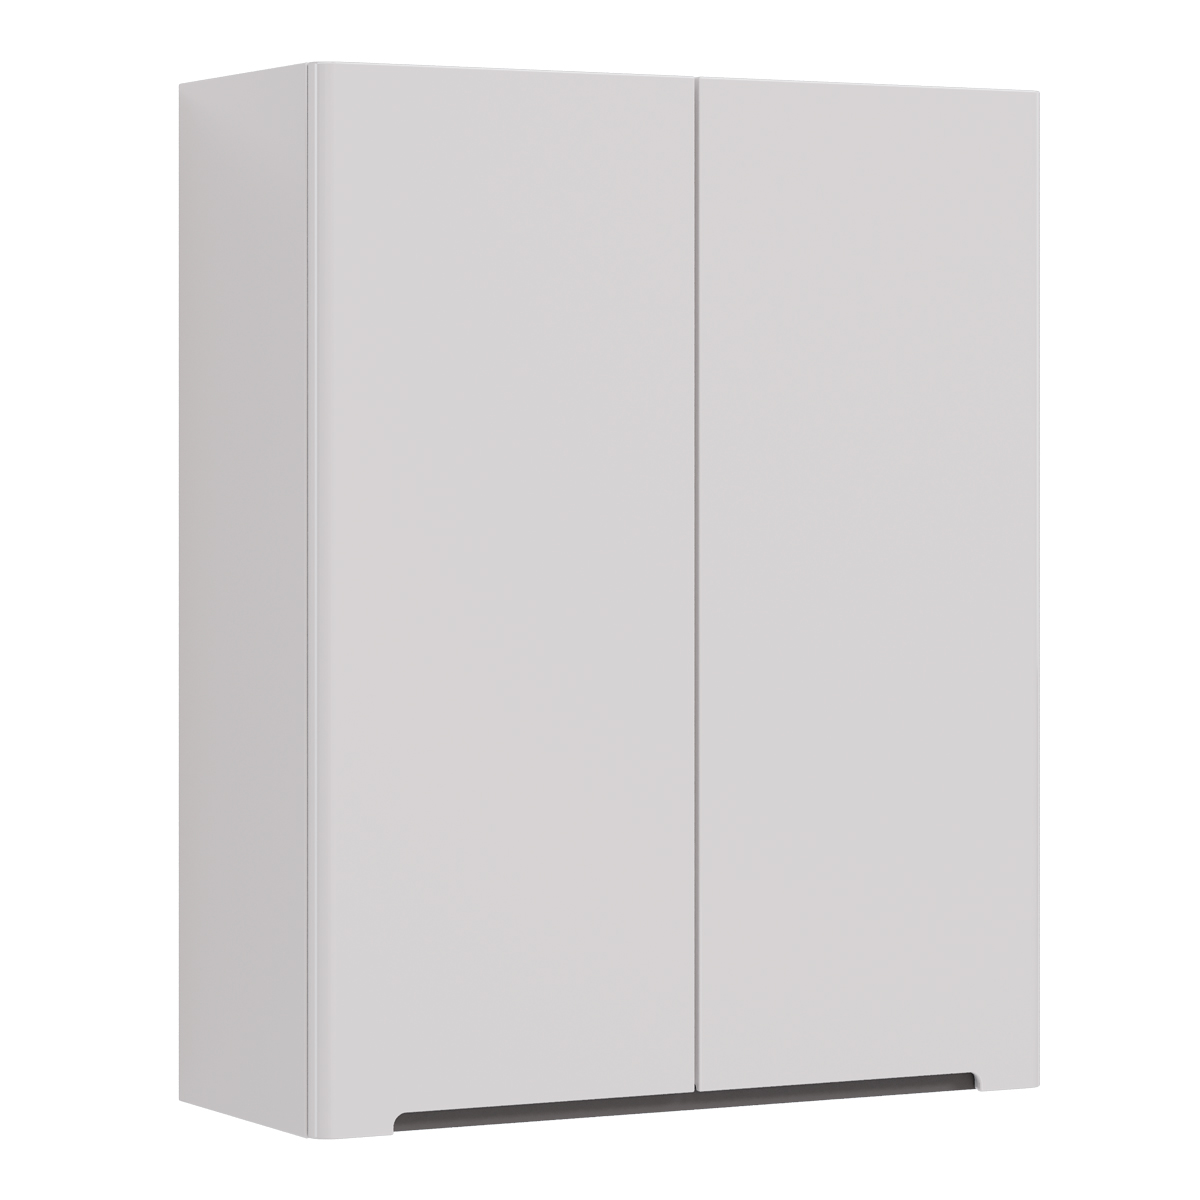 Шкаф Lemark BUNO 60 см подвесной, 2-х дверный, цвет корпуса, фасада: Белый глянец